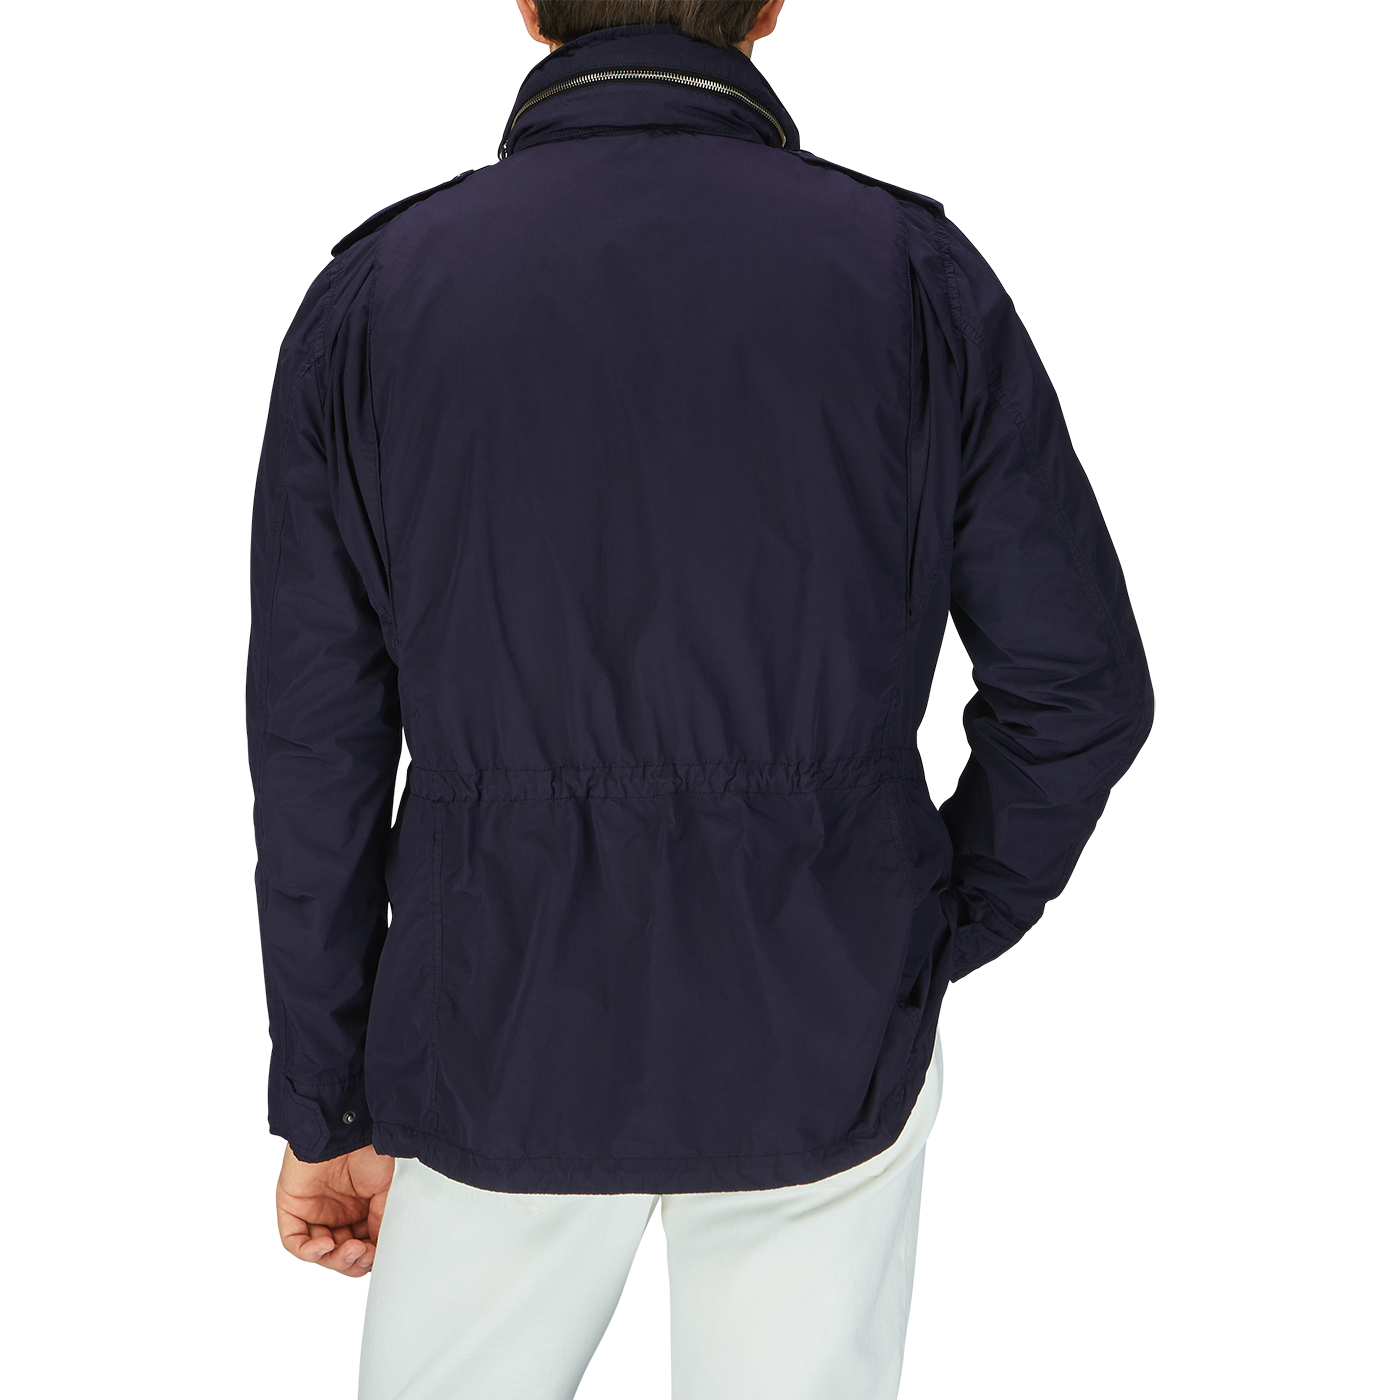 The man is wearing a Navy Blue Nylon Taffeta M65 field jacket by Aspesi with white pants.